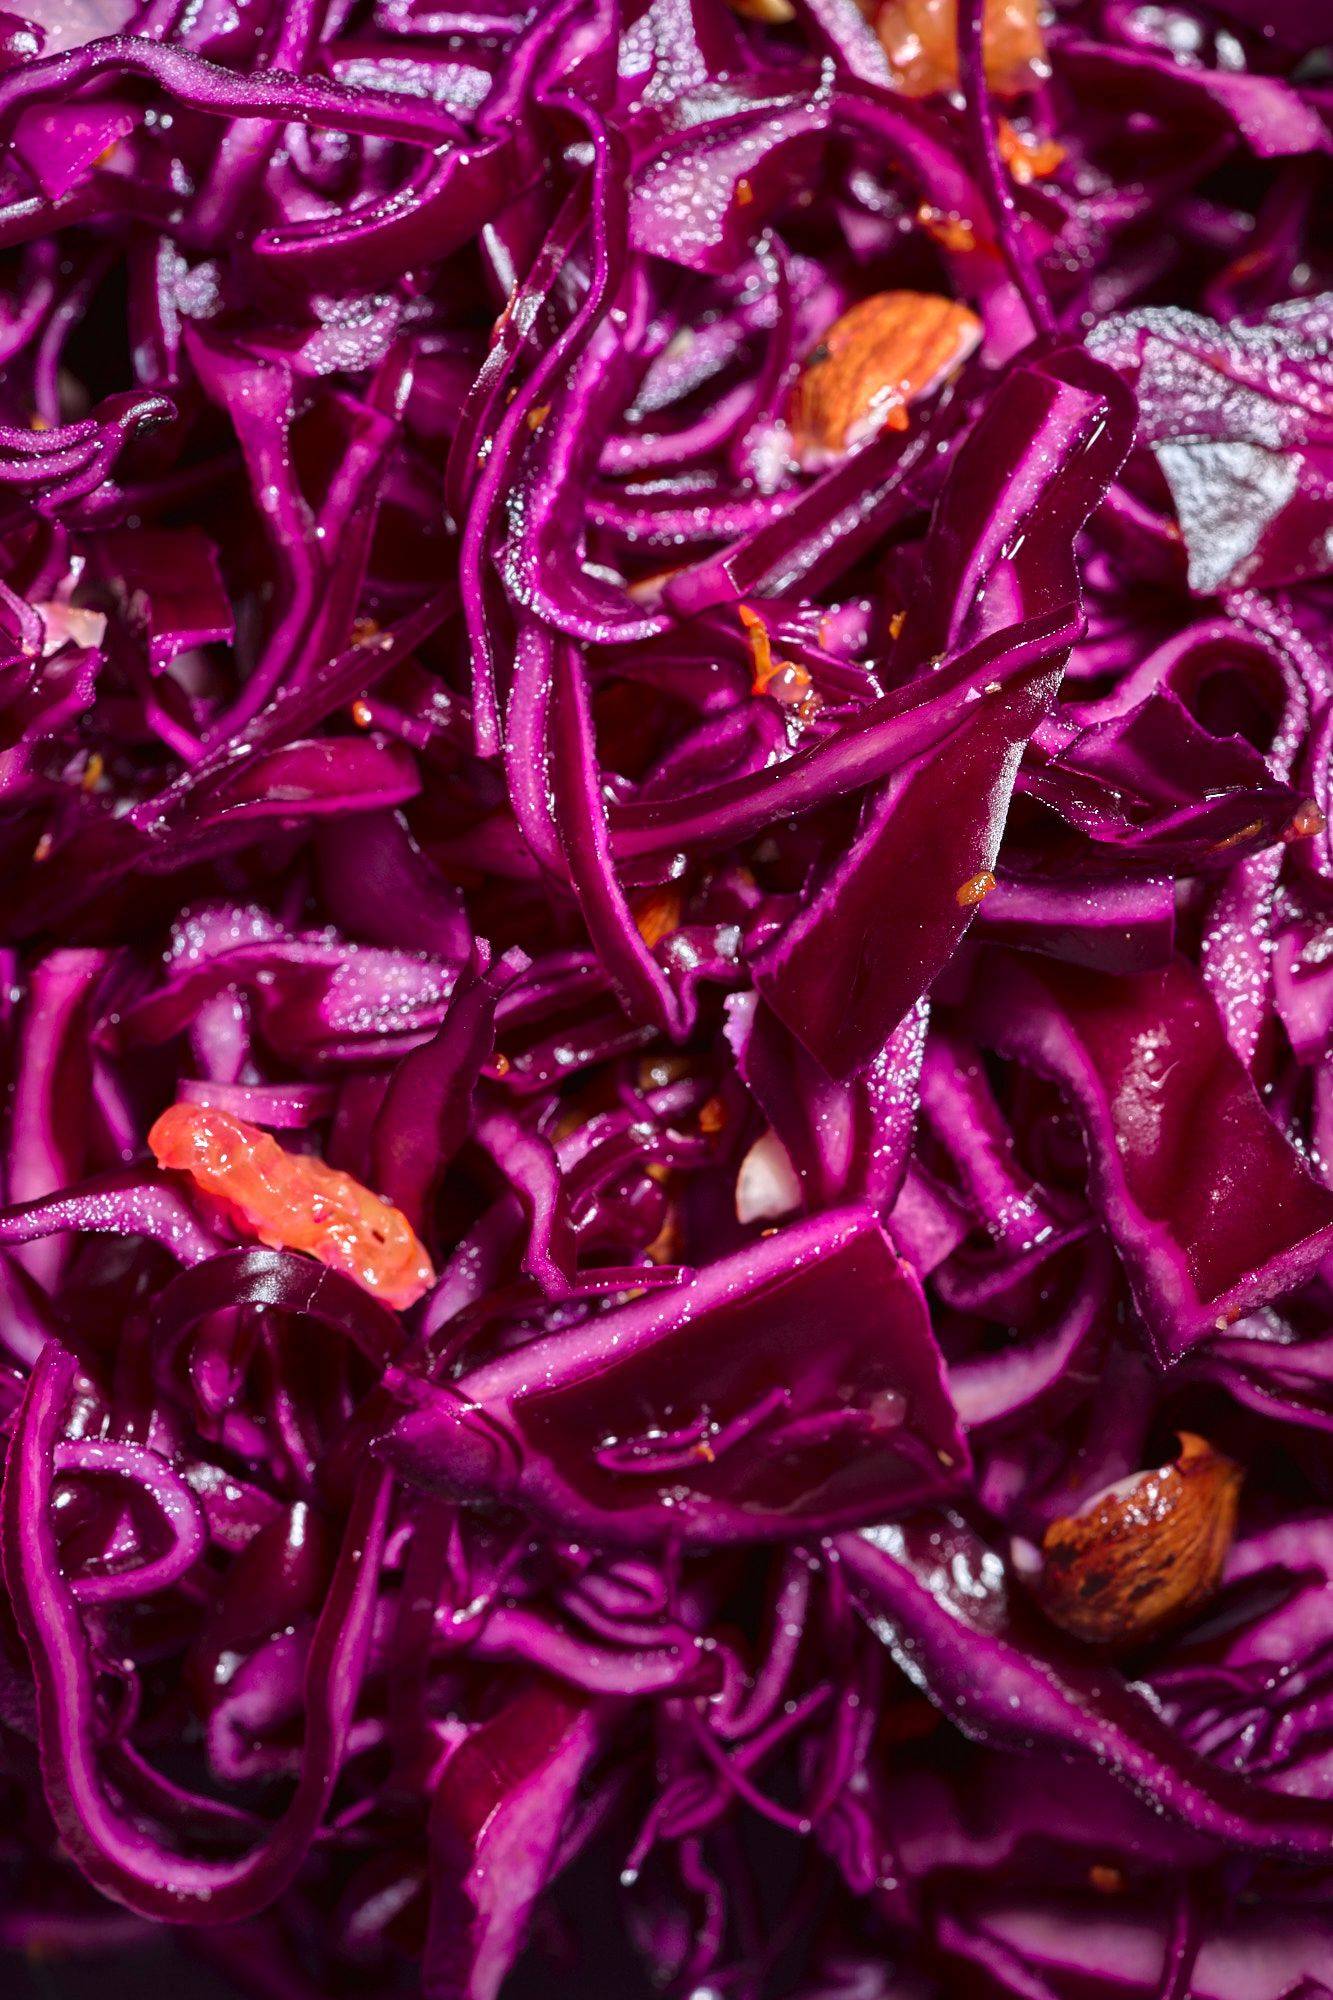 raw marinated red cabbage-tangerine salad